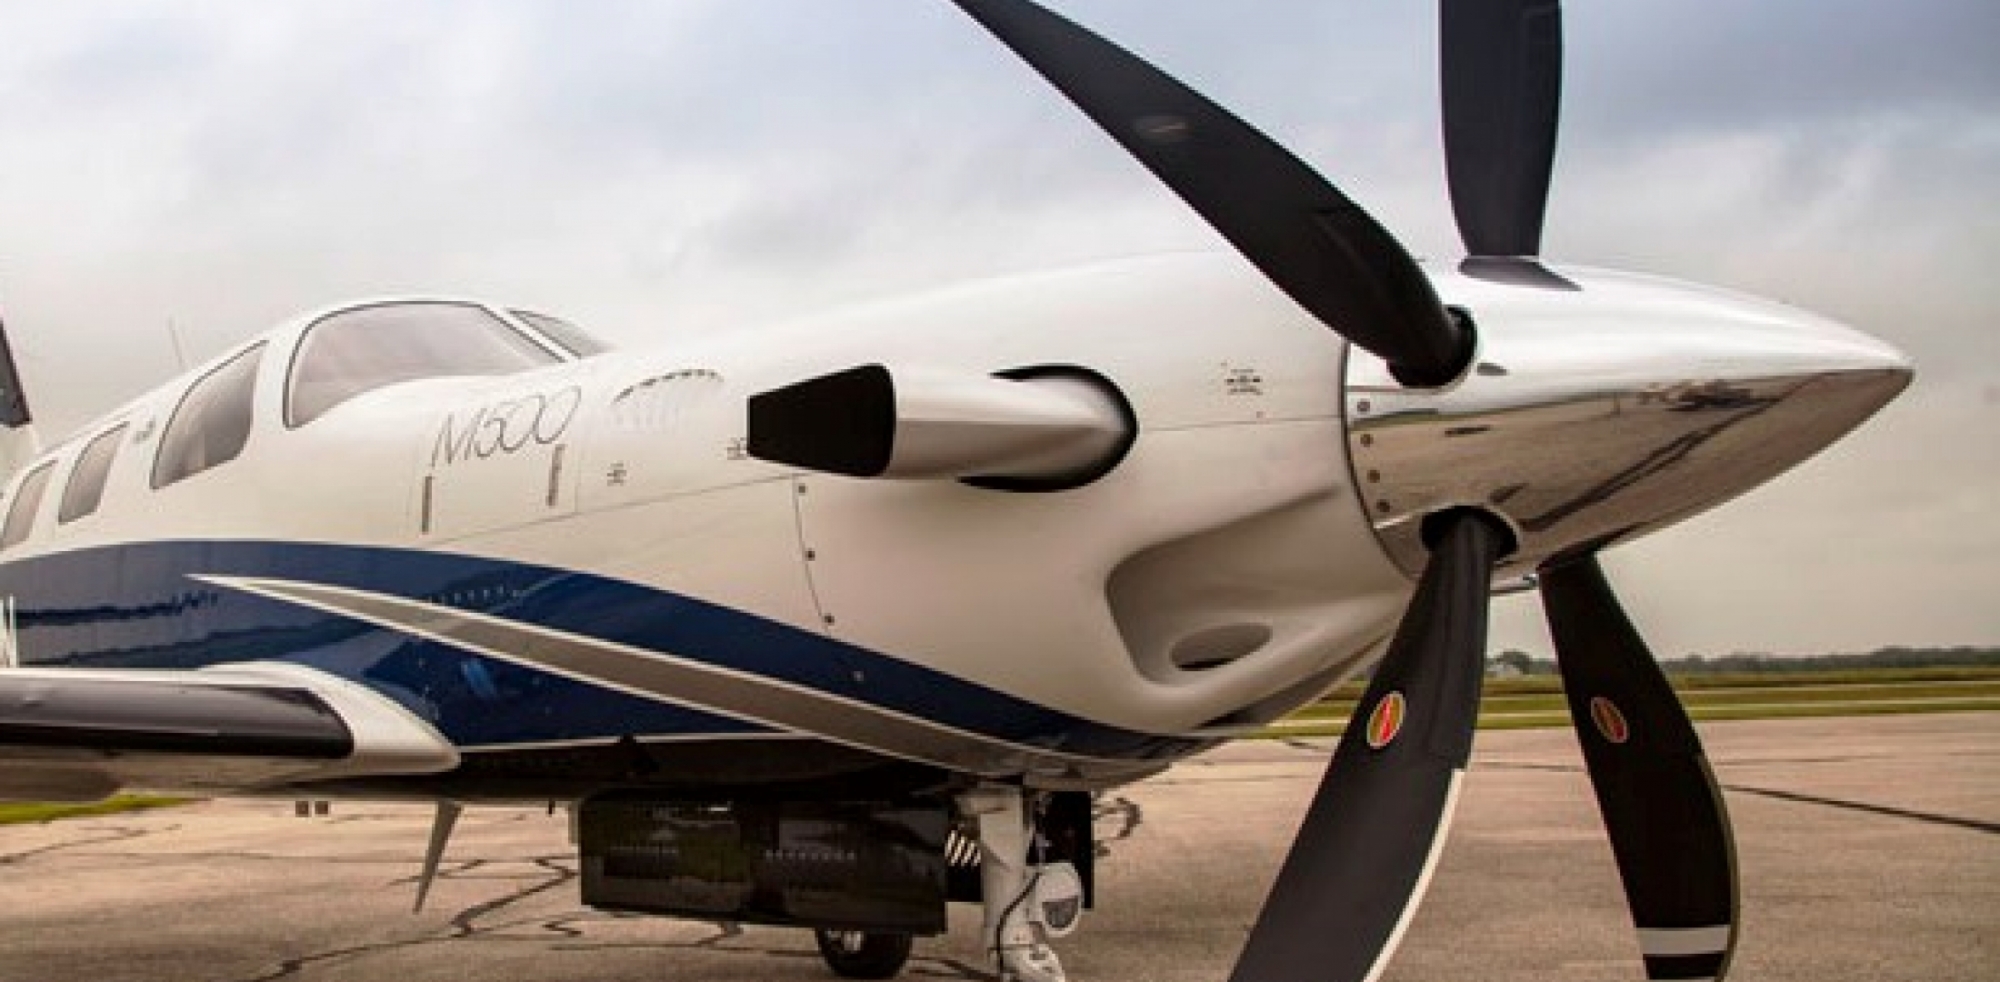 Piper Delivers First M500 Into Poland. Piper Aircraft will deliver company